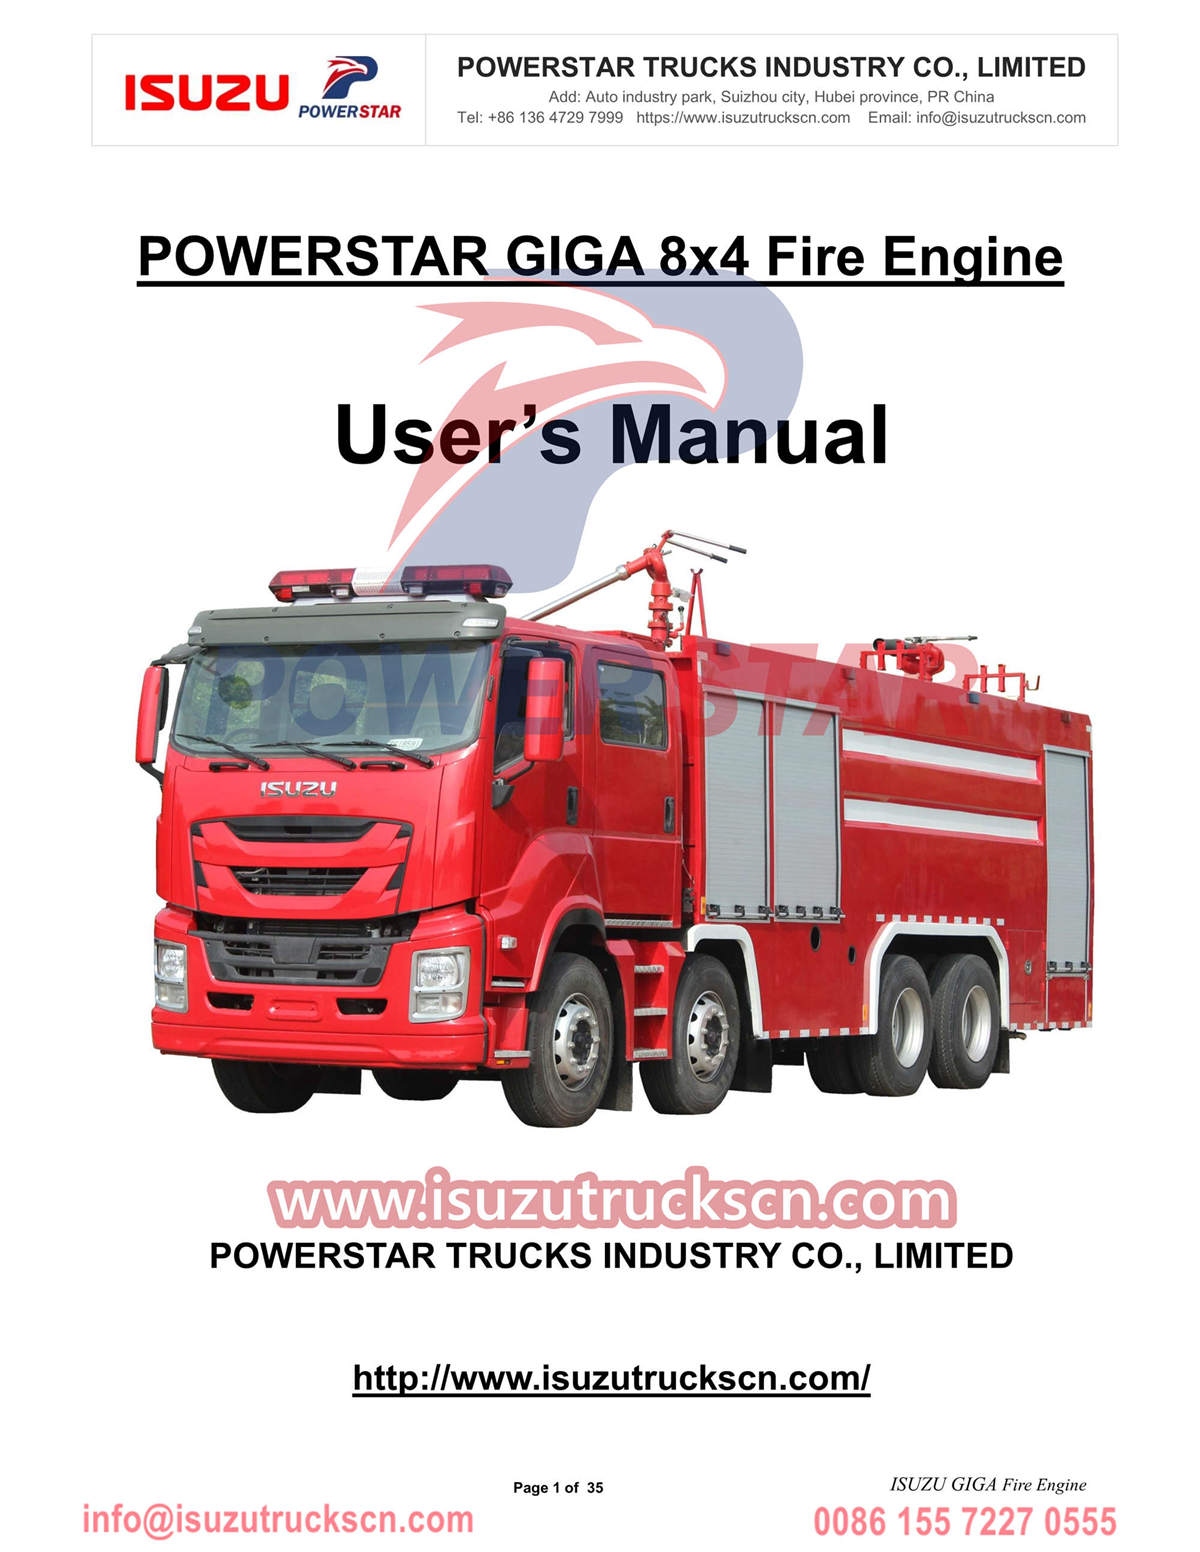 Camion de pompiers Isuzu GIGA 16cbm exporté vers l'Ethiopie
        